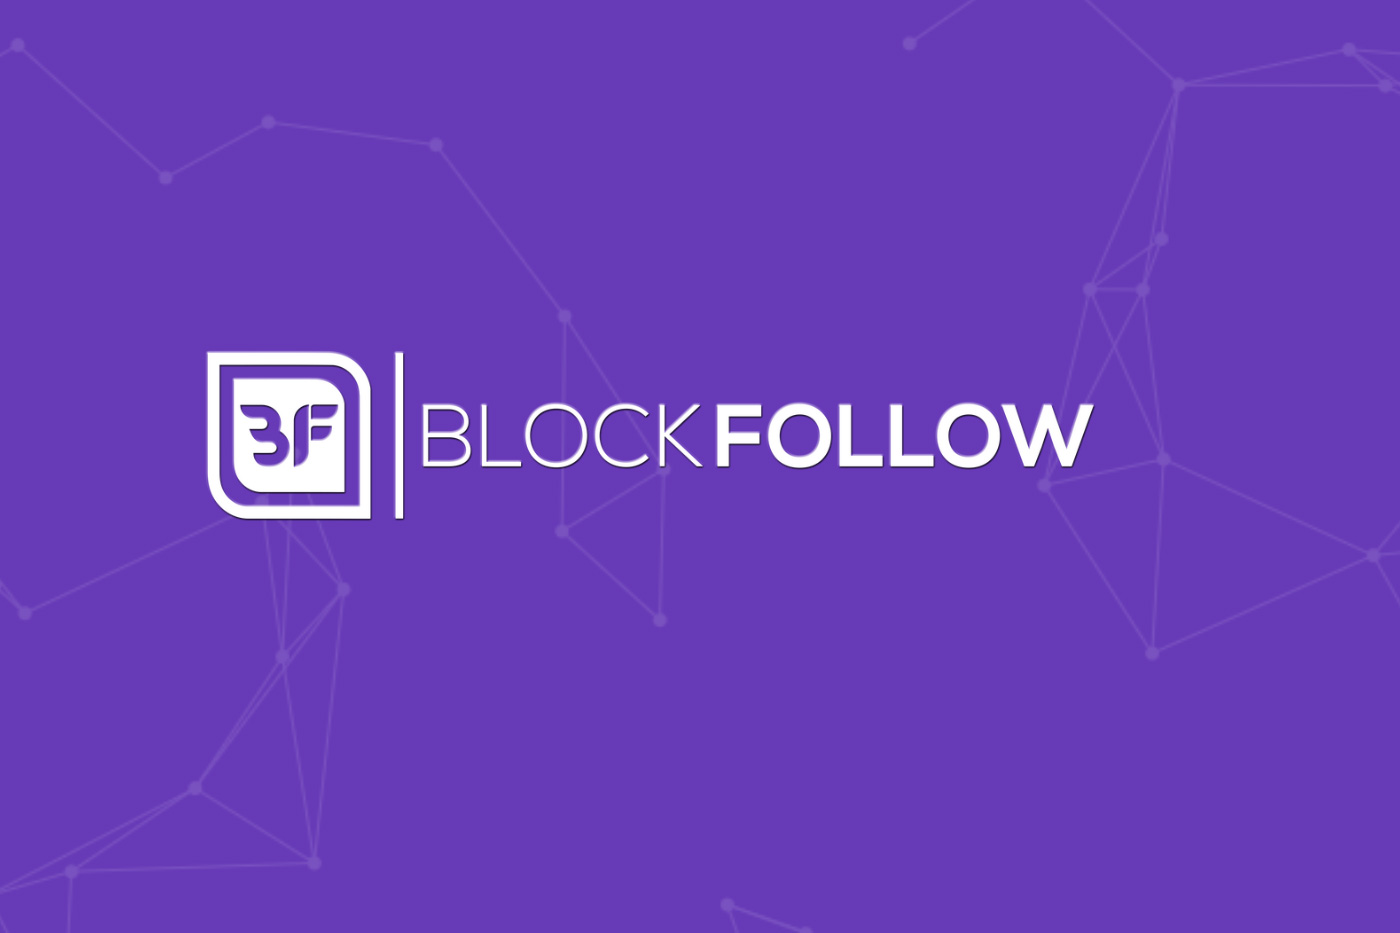 Blockfollow